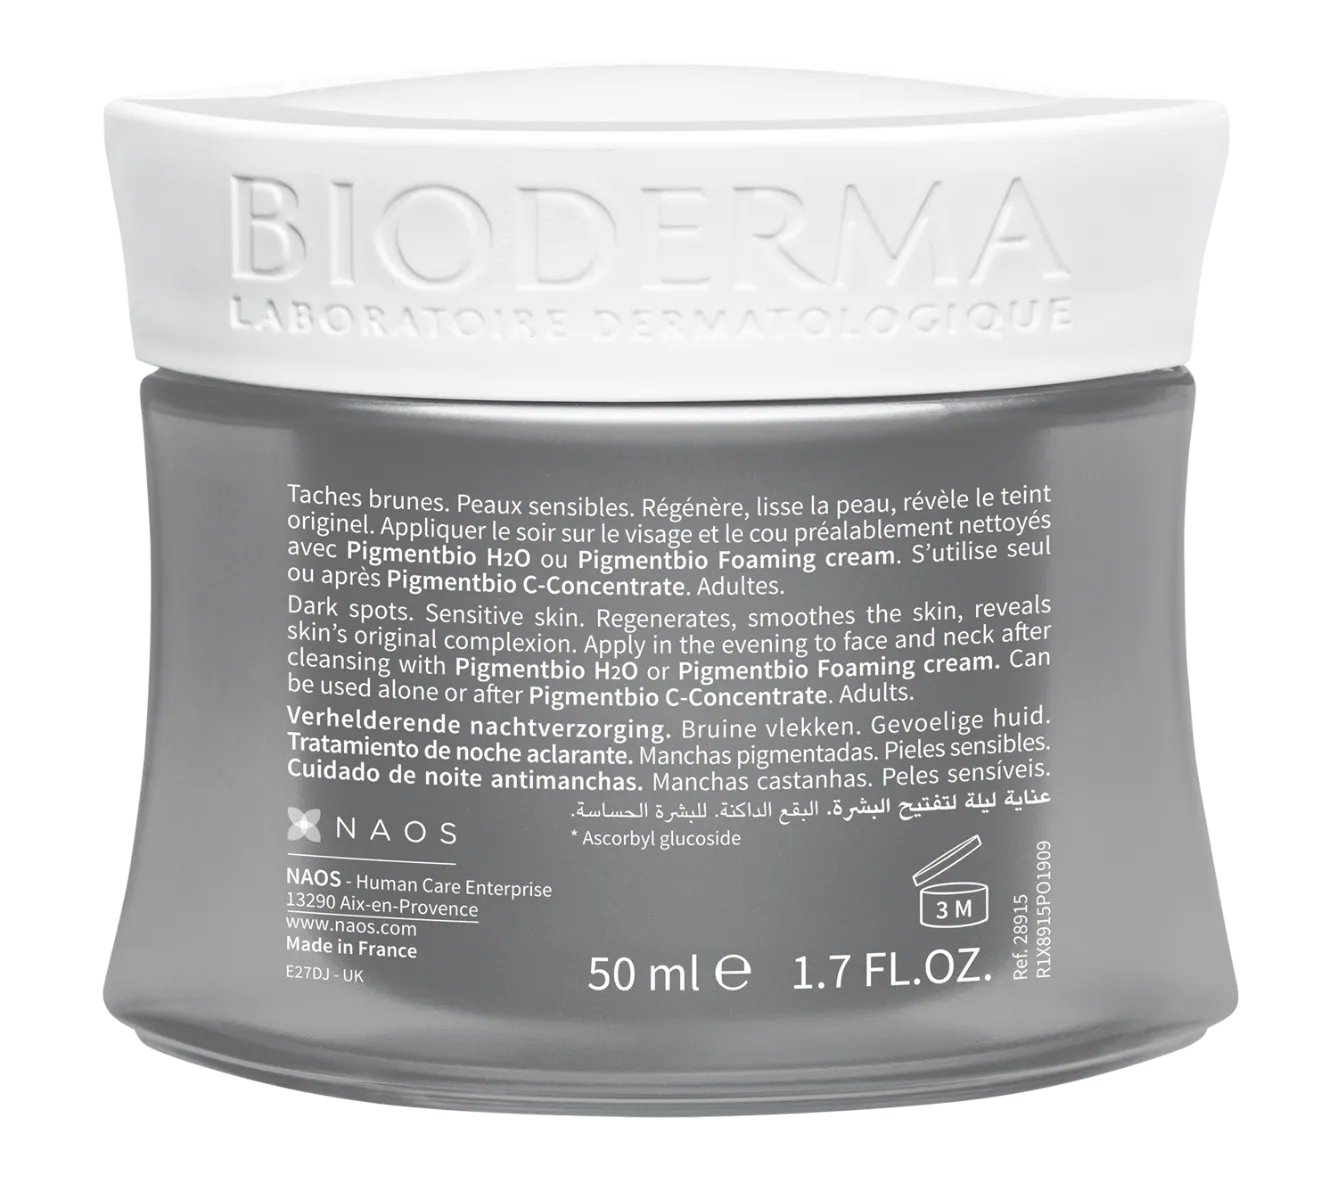 Crema regeneratoare de noapte Pigmentbio, 50ml, Bioderma 